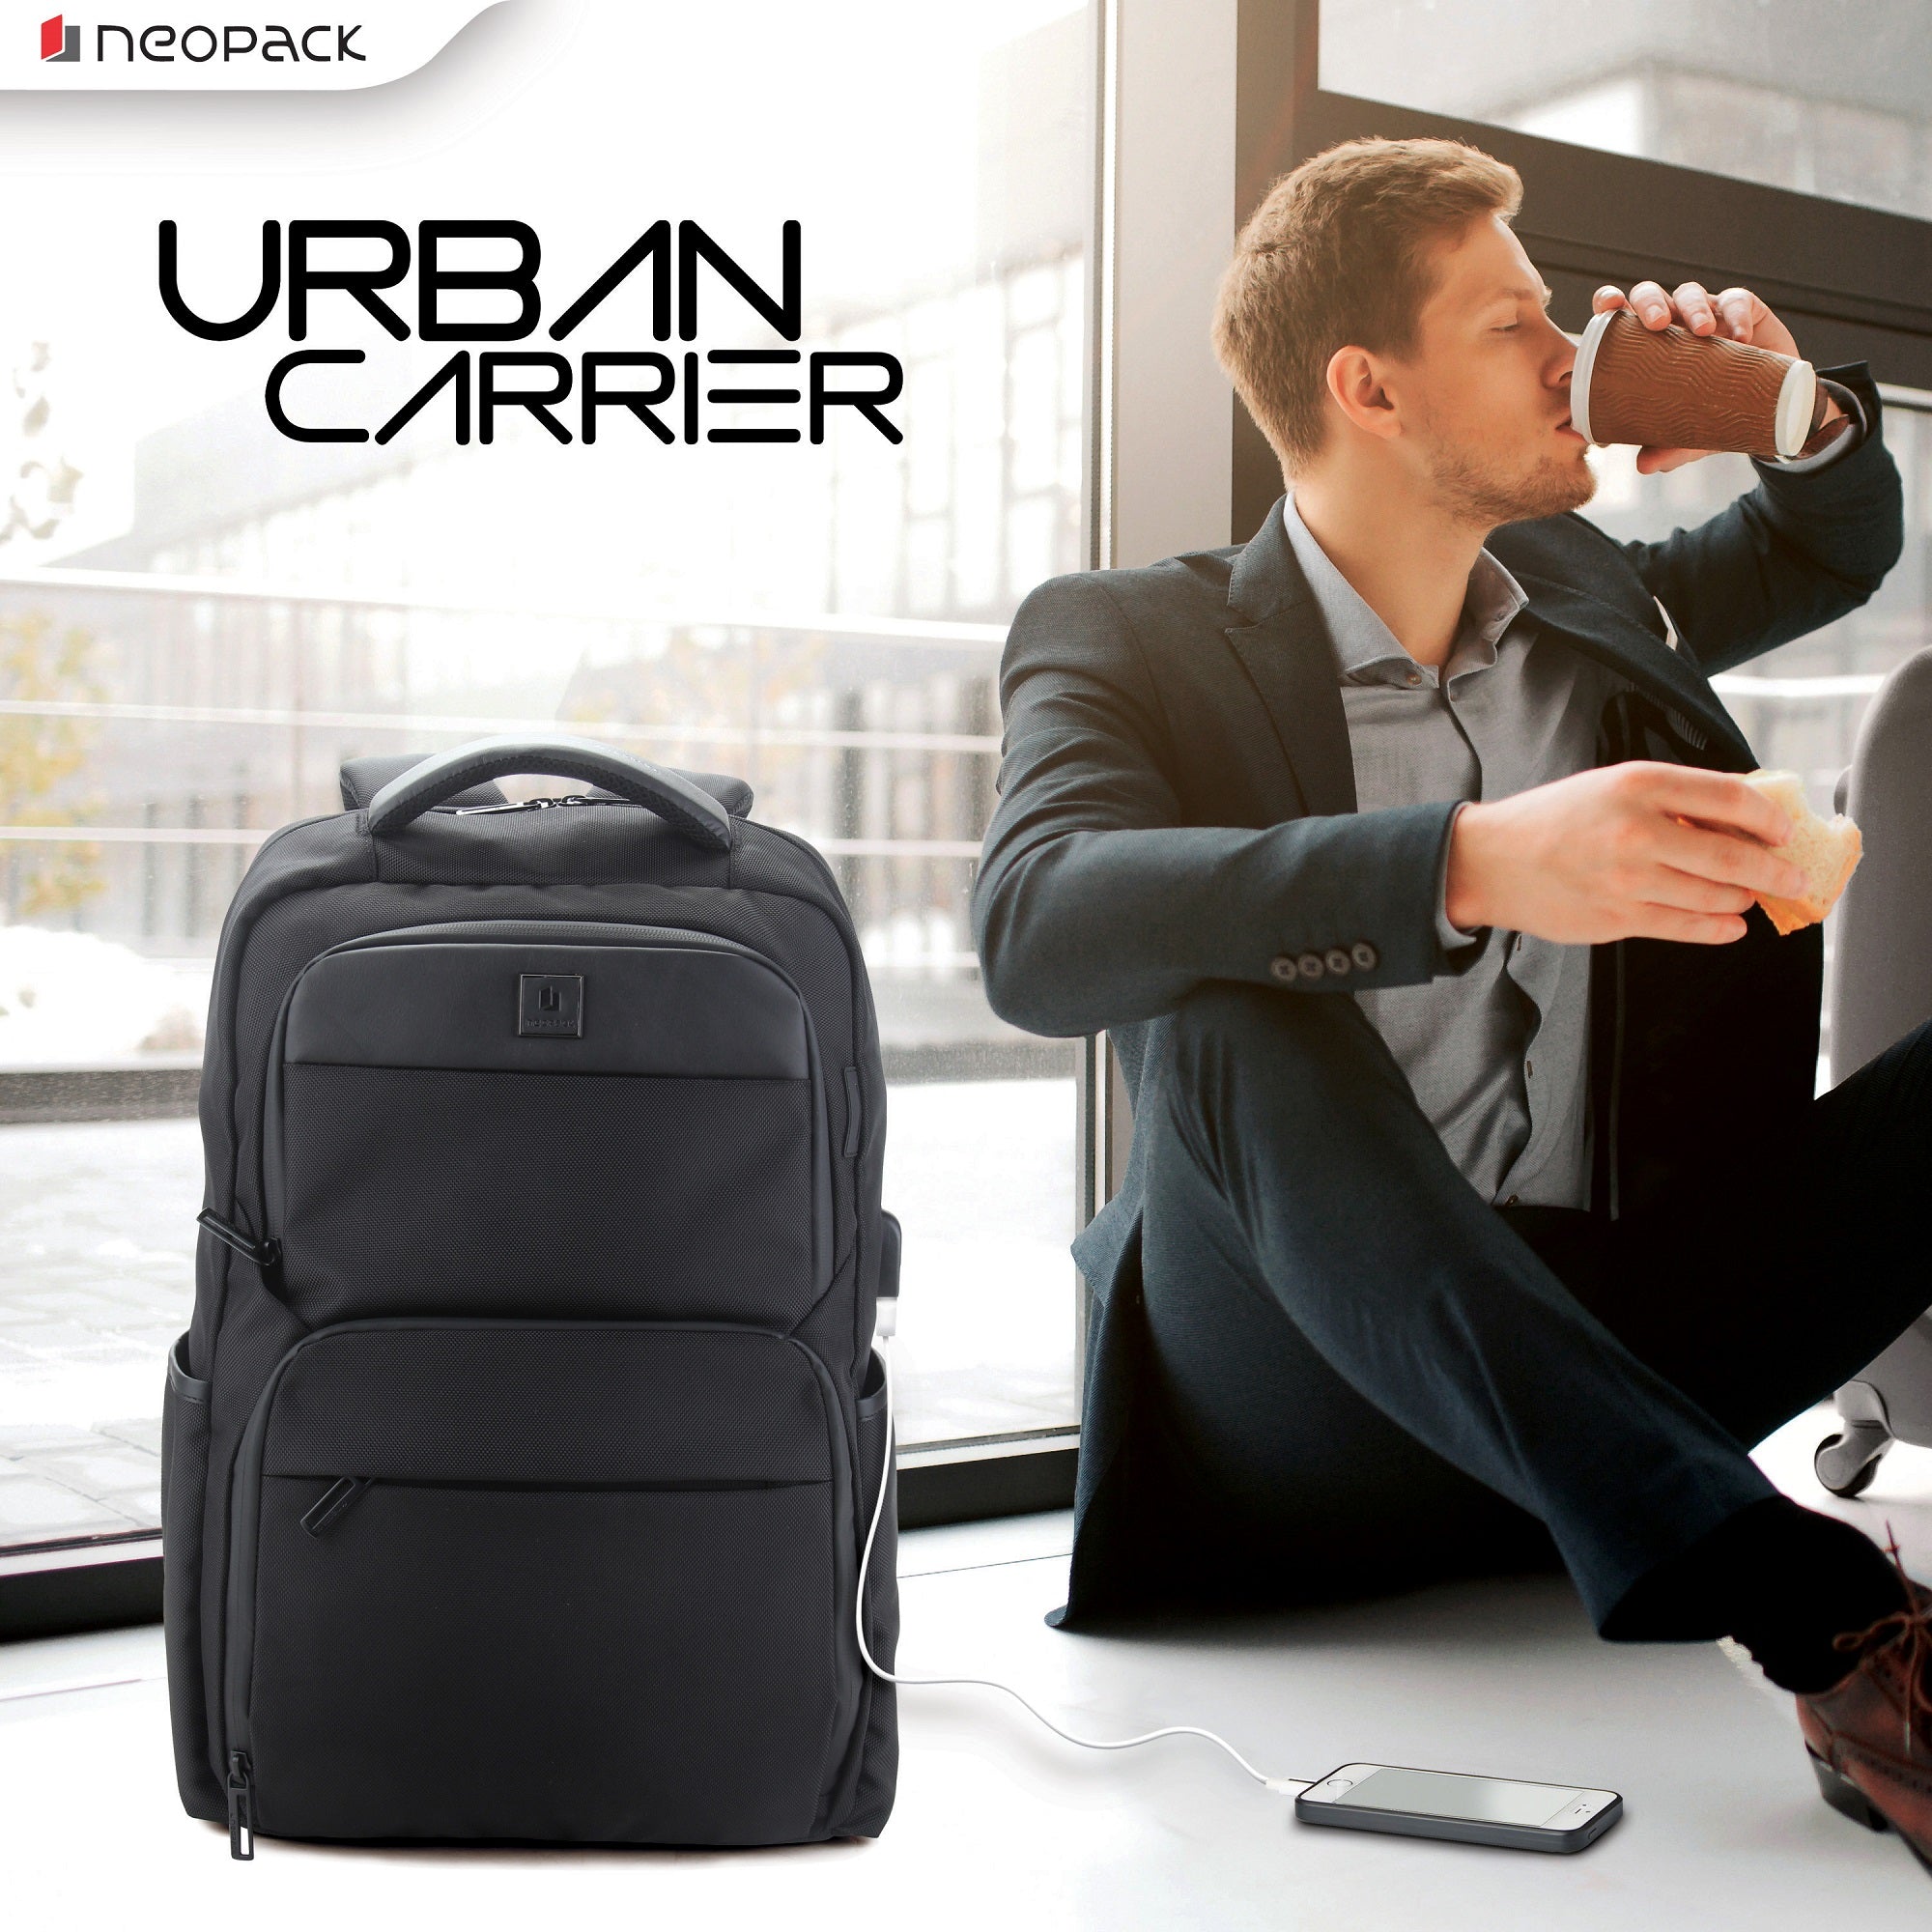 Urban Carrier Backpack